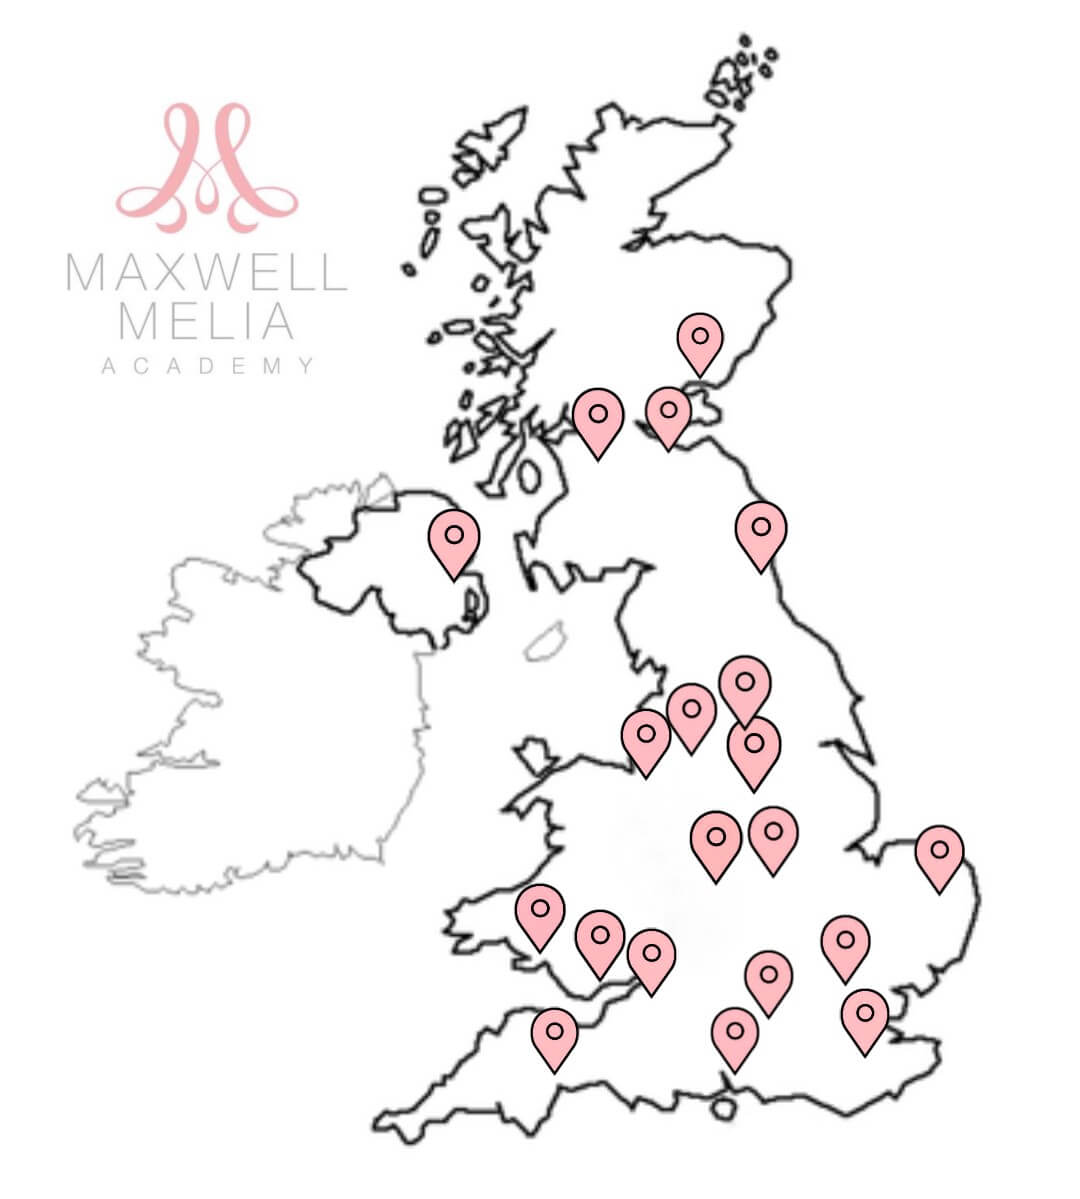 Maxwell Melia 23 Locations Across the UK